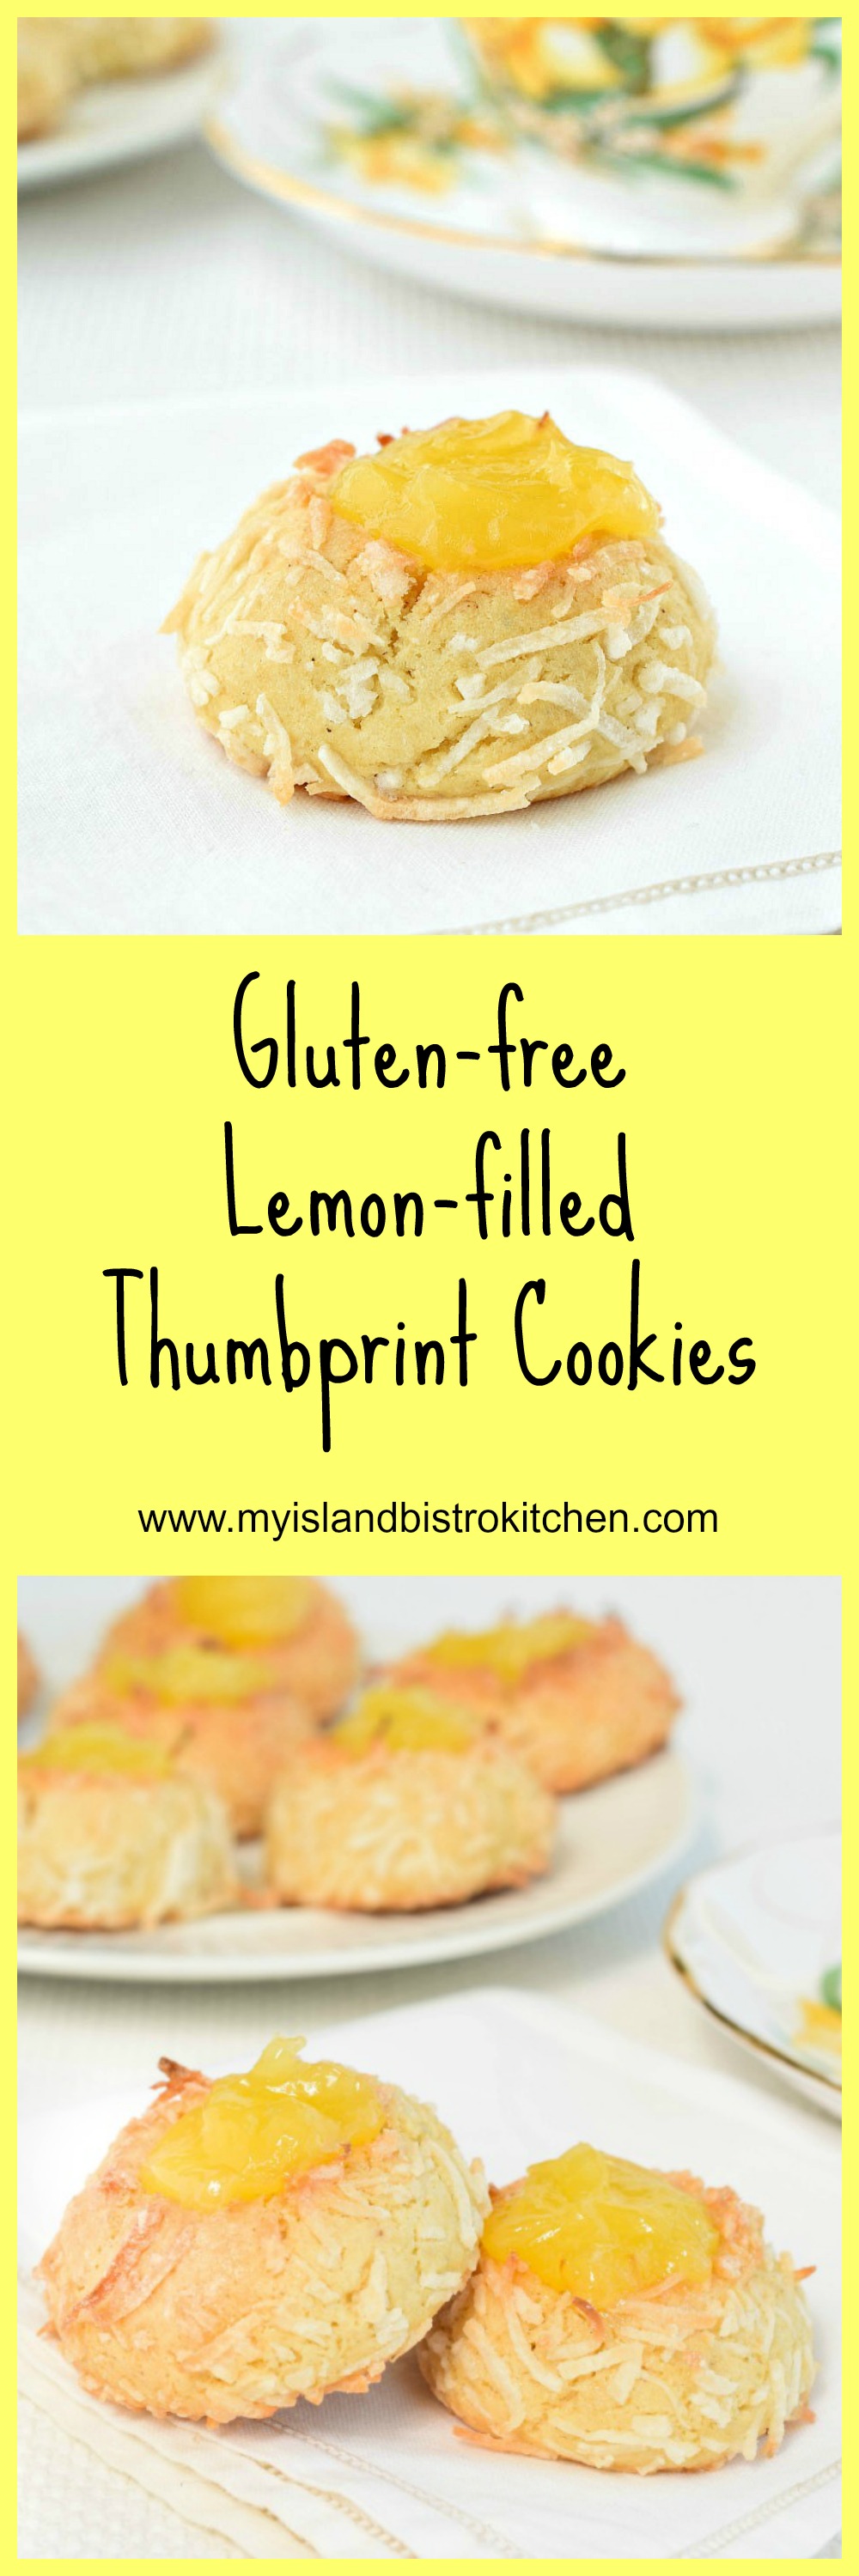 Gluten-free Lemon-filled Thumbprint Cookies